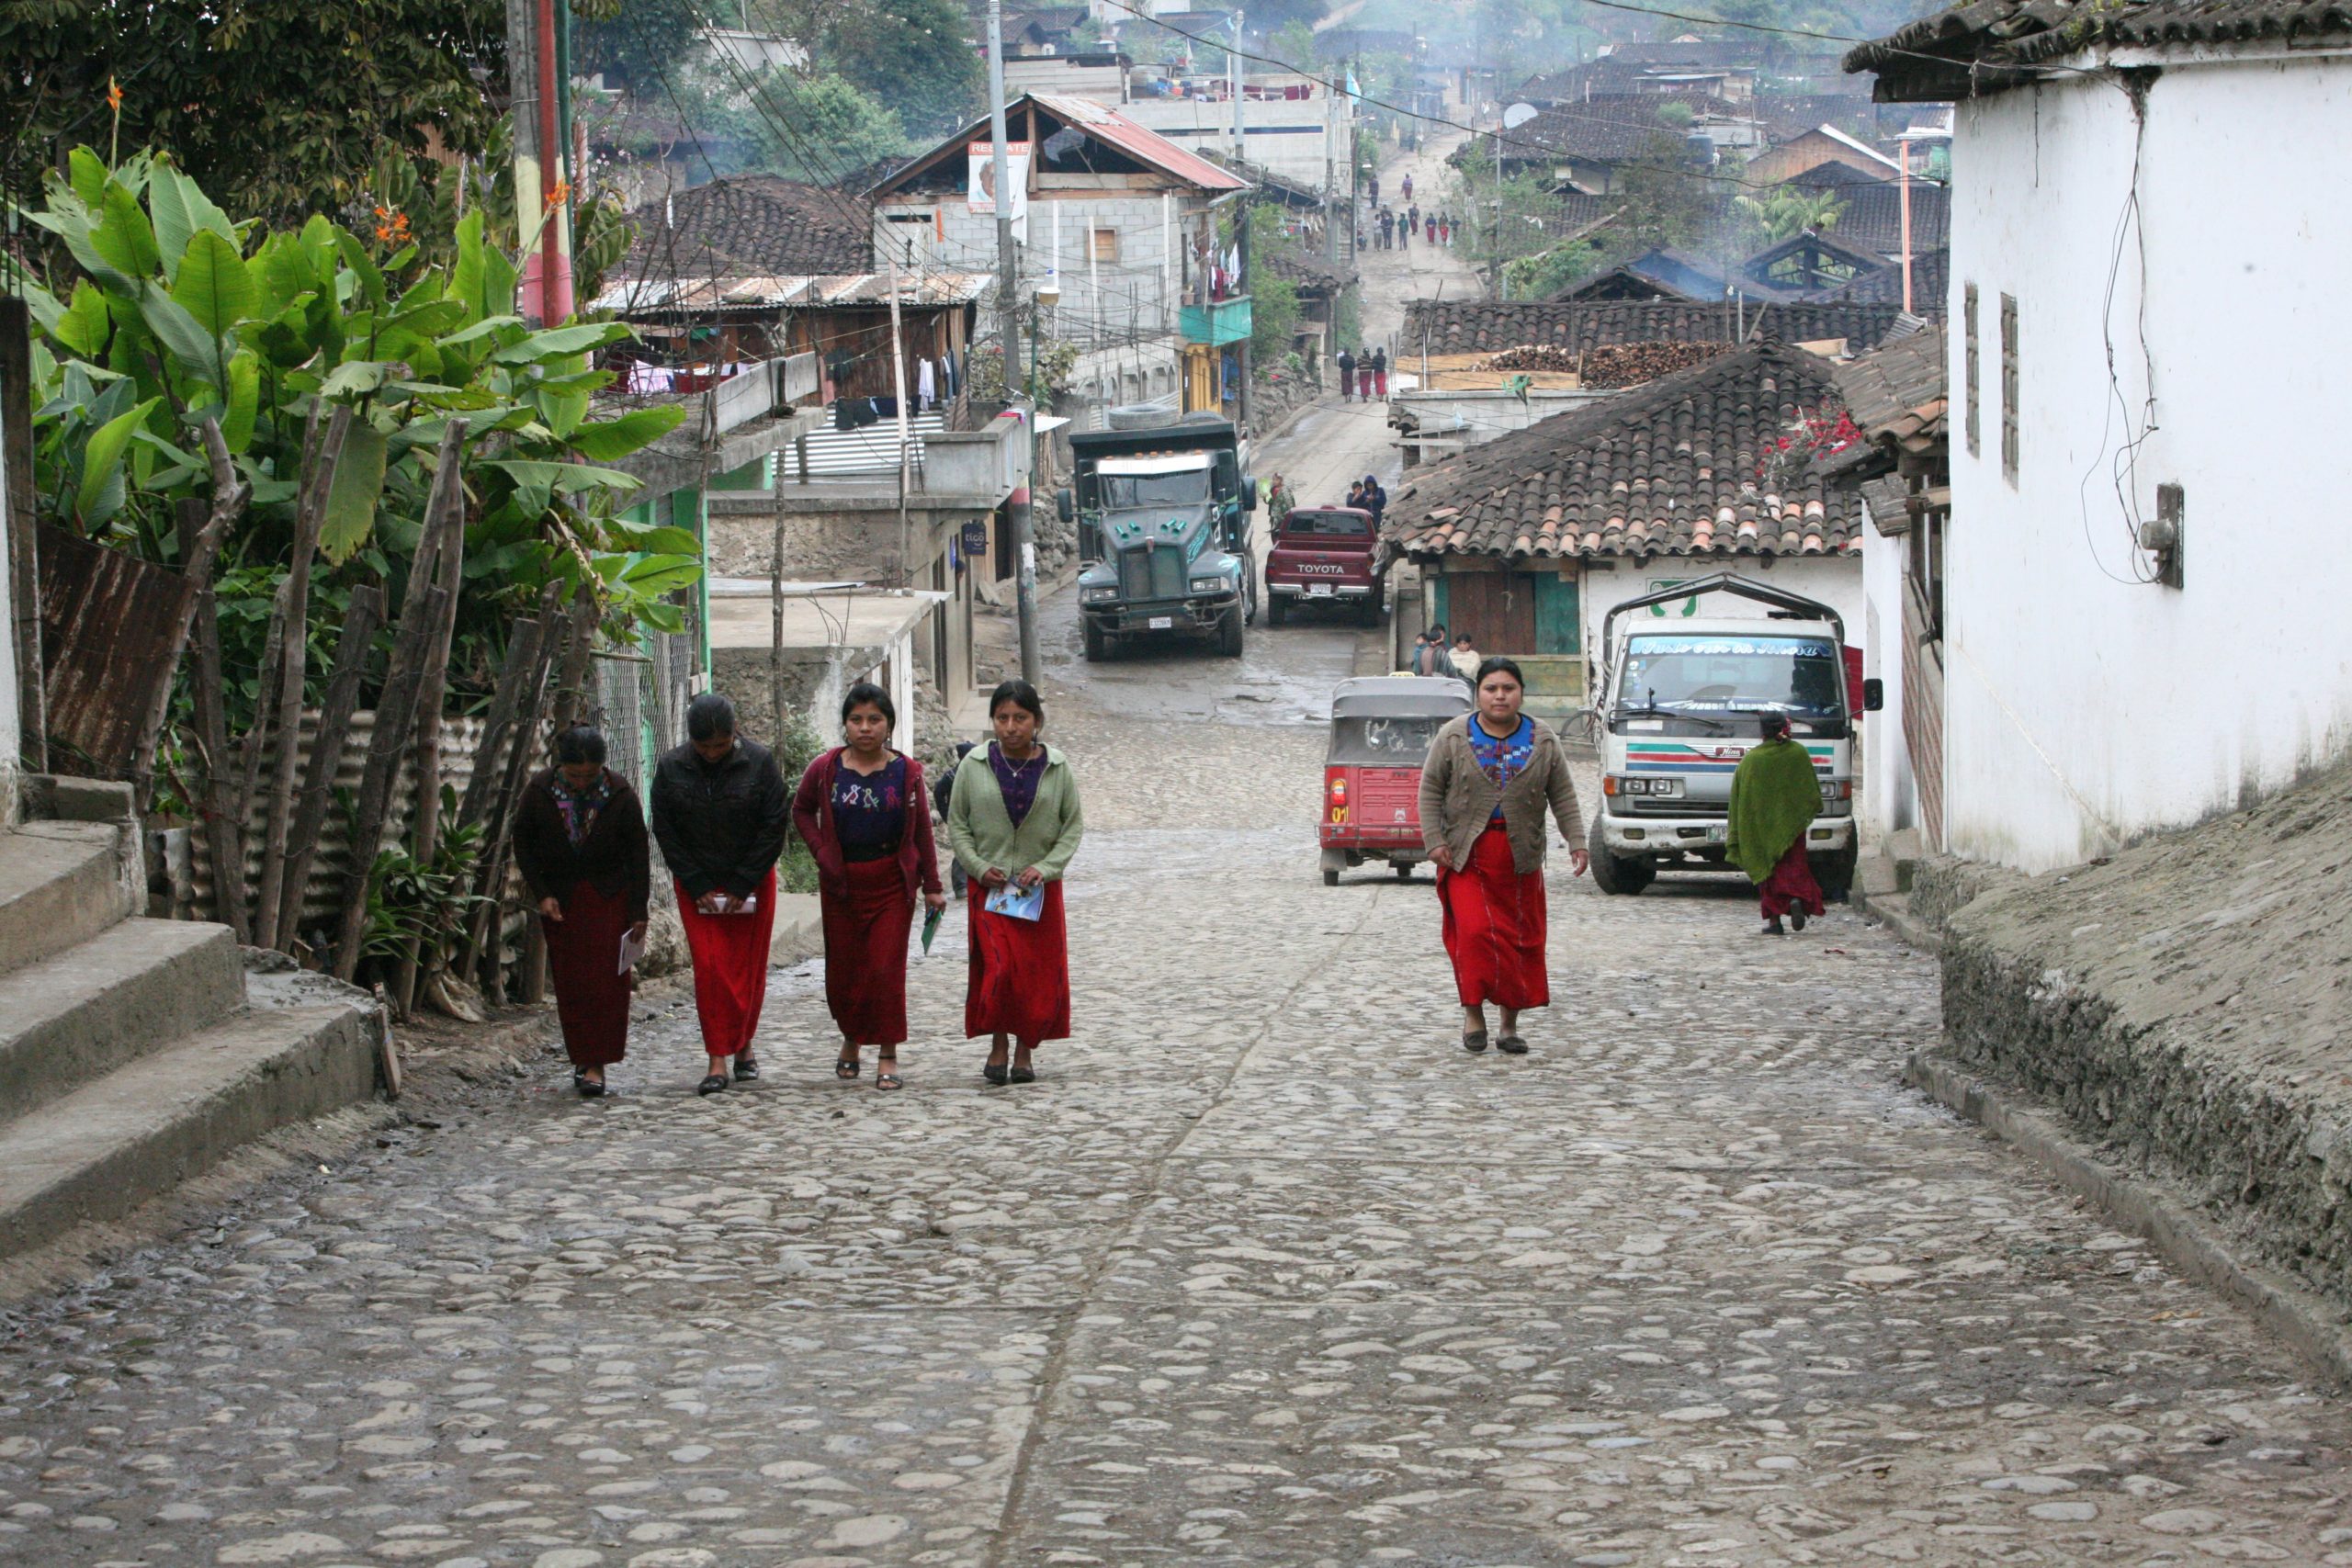 A street scene in Chajul, Guatemala, where Asociación Chajulense is located. © Sean Hawkey